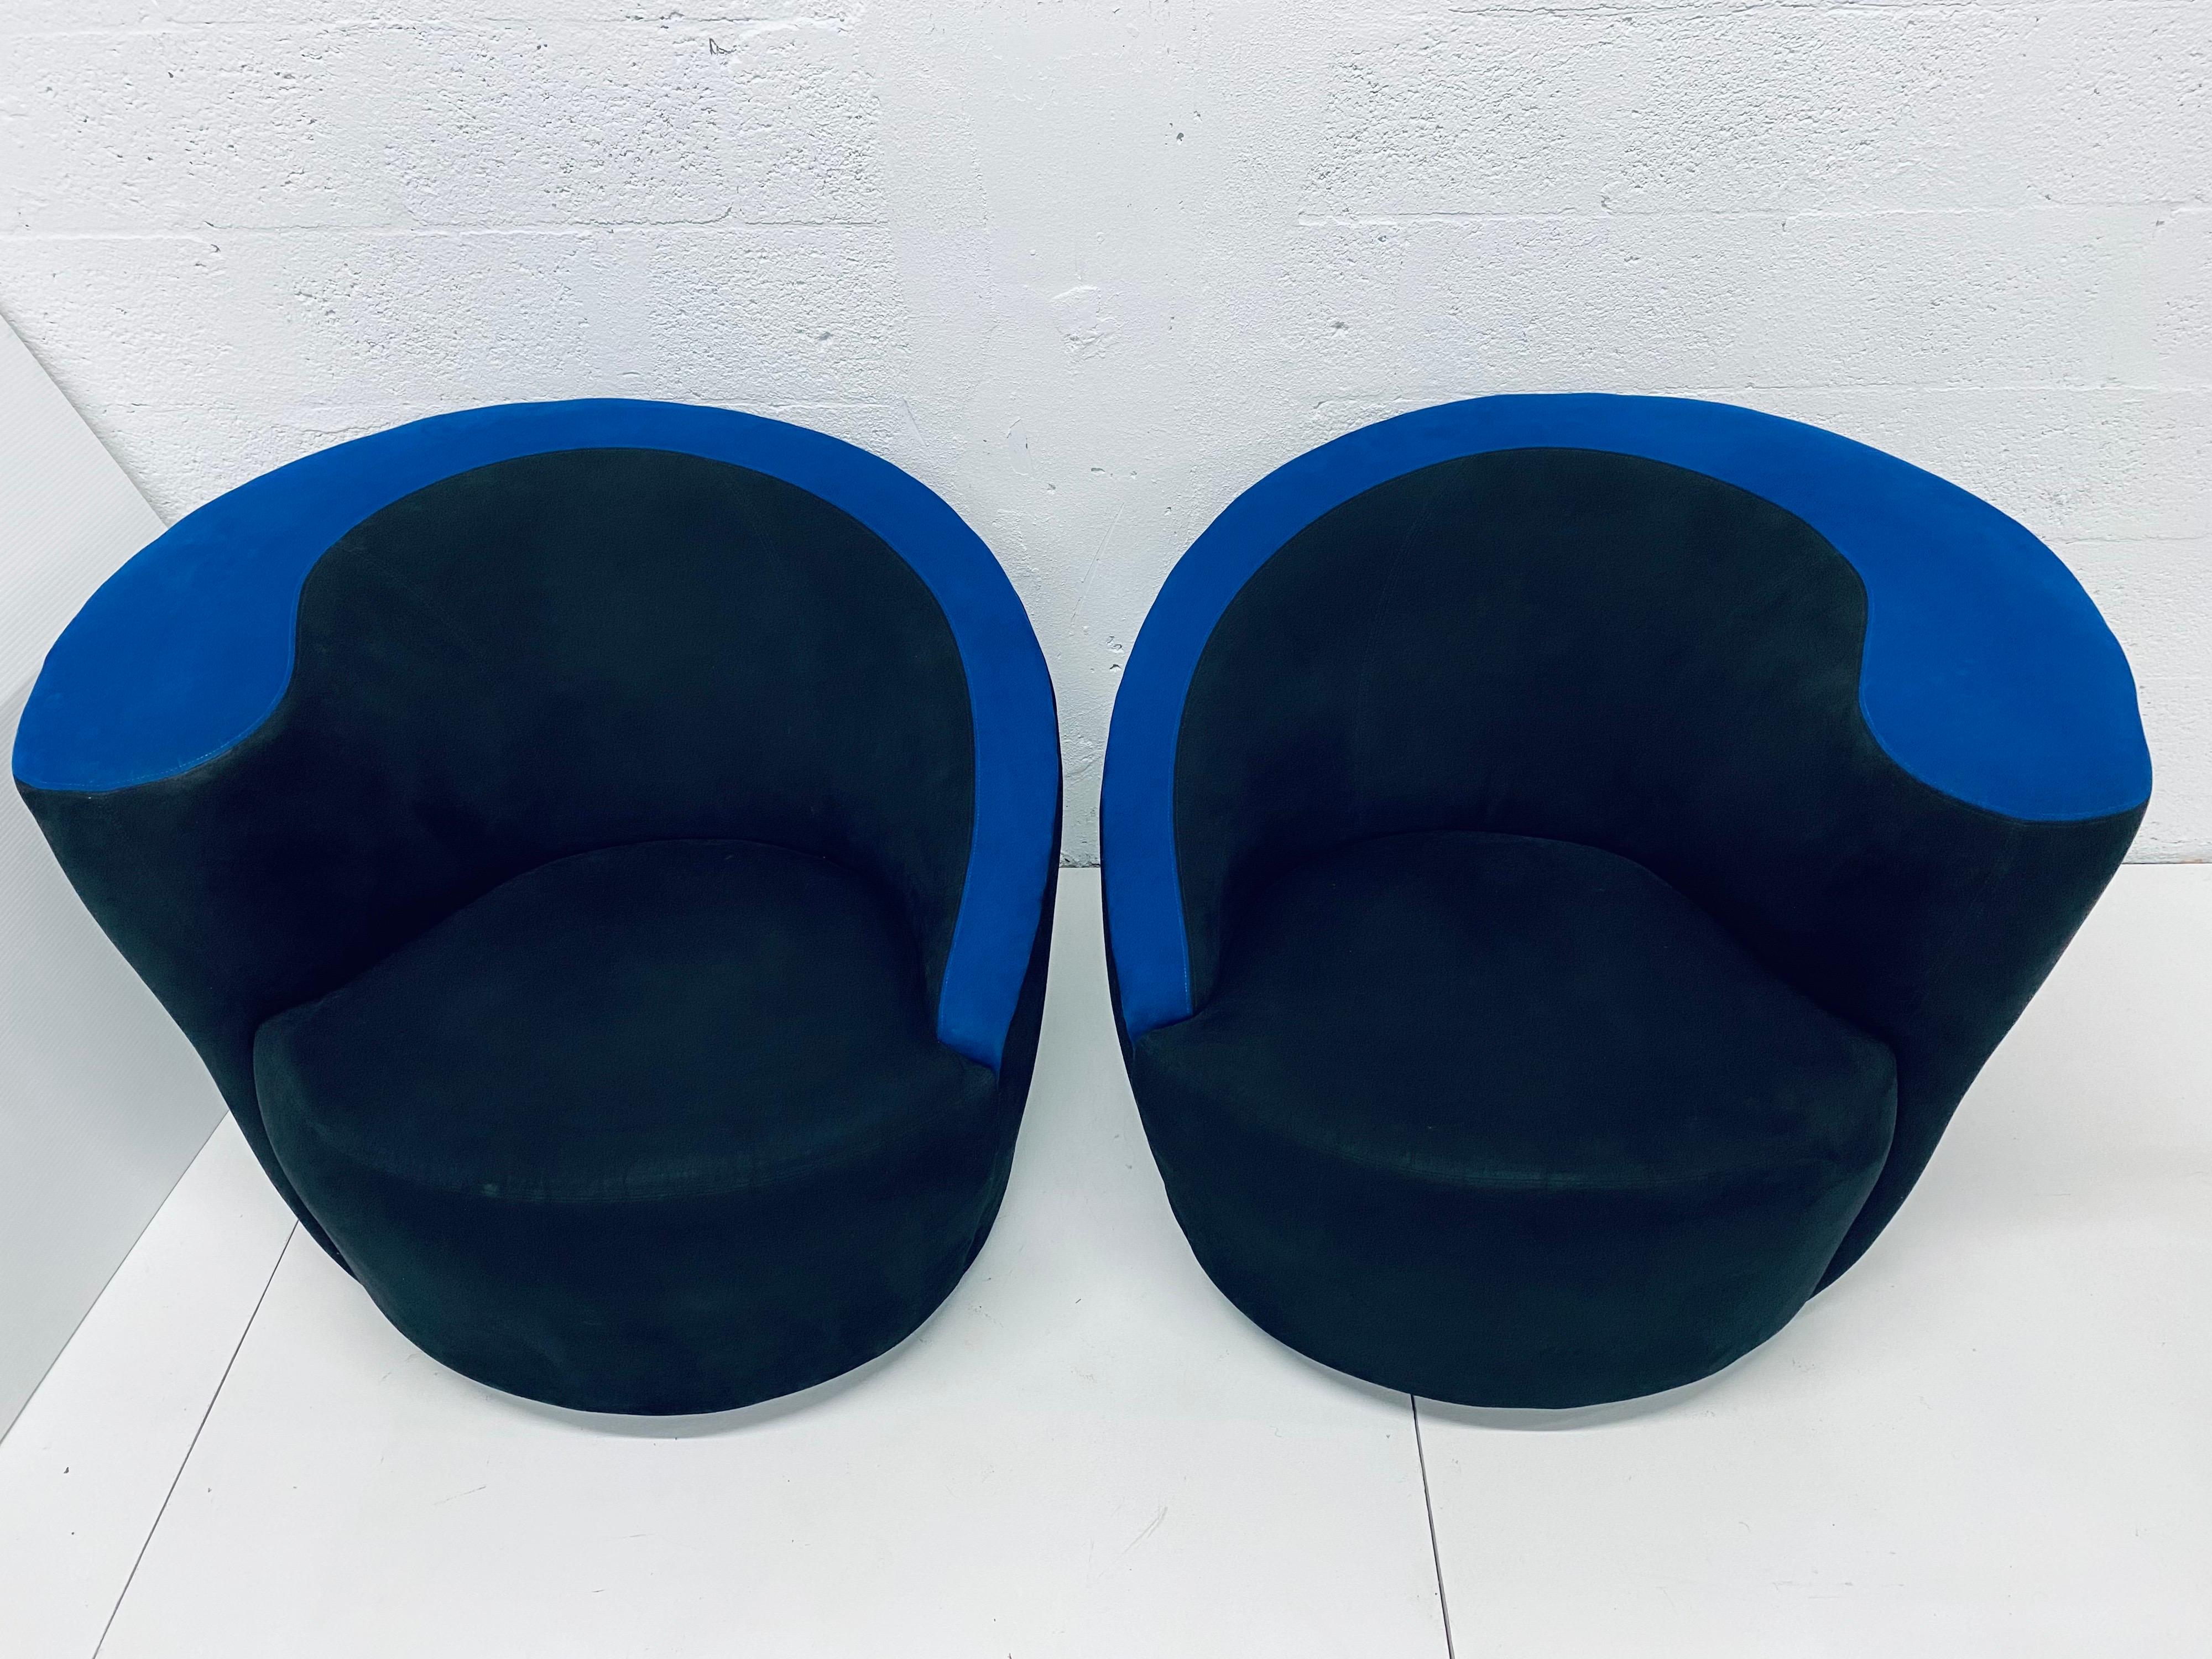 Mid-Century Modern Vladimir Kagan “Nautilus” Black and Blue Ultra Suede Swivel Club Chairs, a Pair